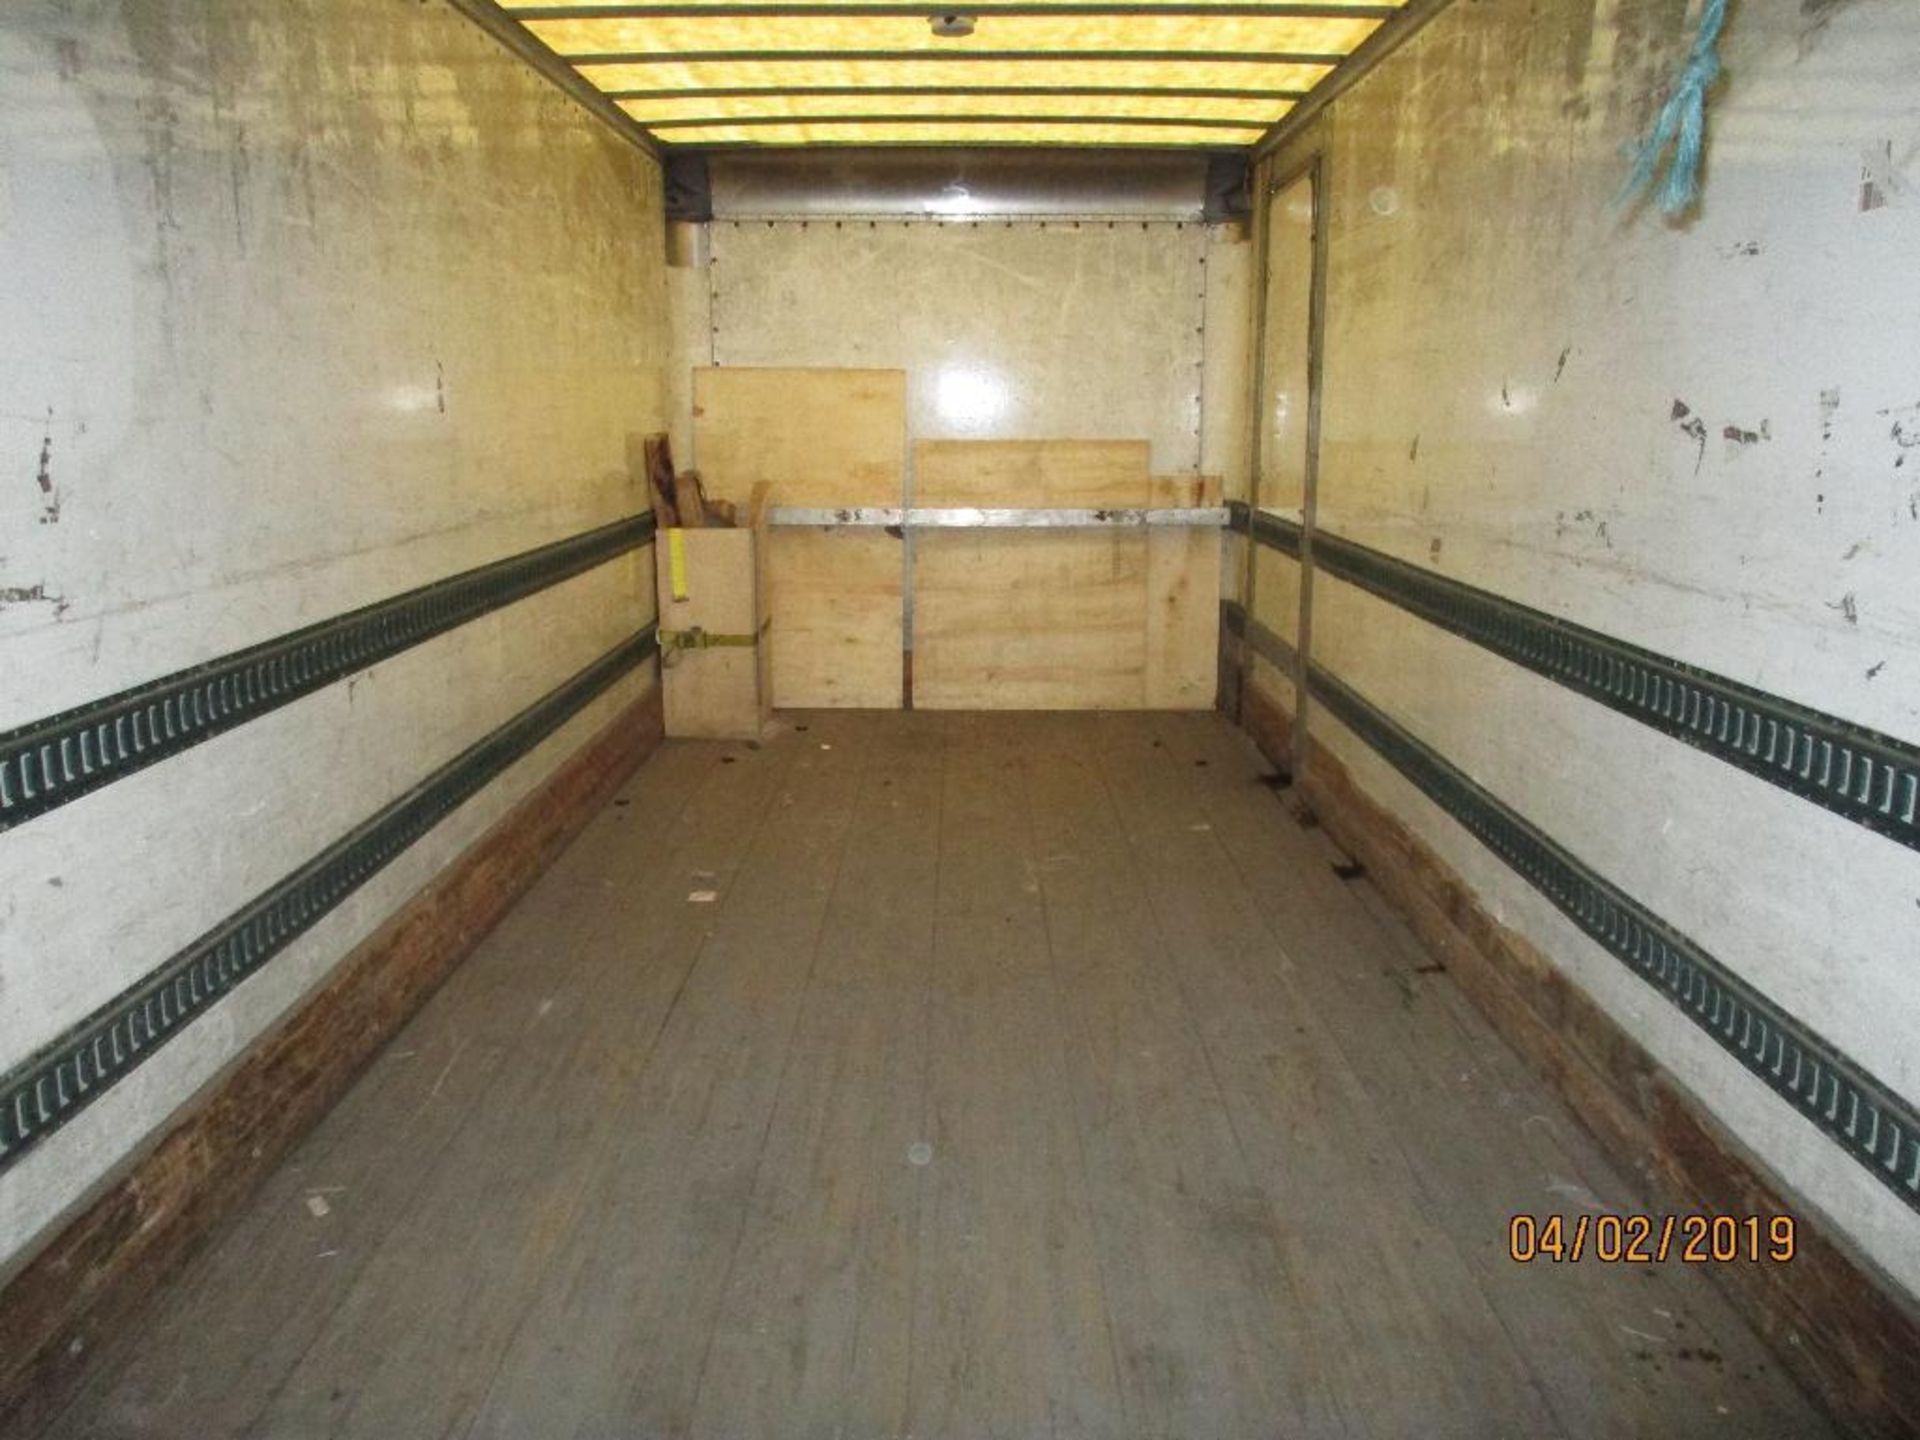 2003 Freightliner Box Truck 20ft With Lift Gate, GVWR 26,000lb, 440,647 Miles, VIN #1FVABSDC54DM9848 - Image 5 of 11